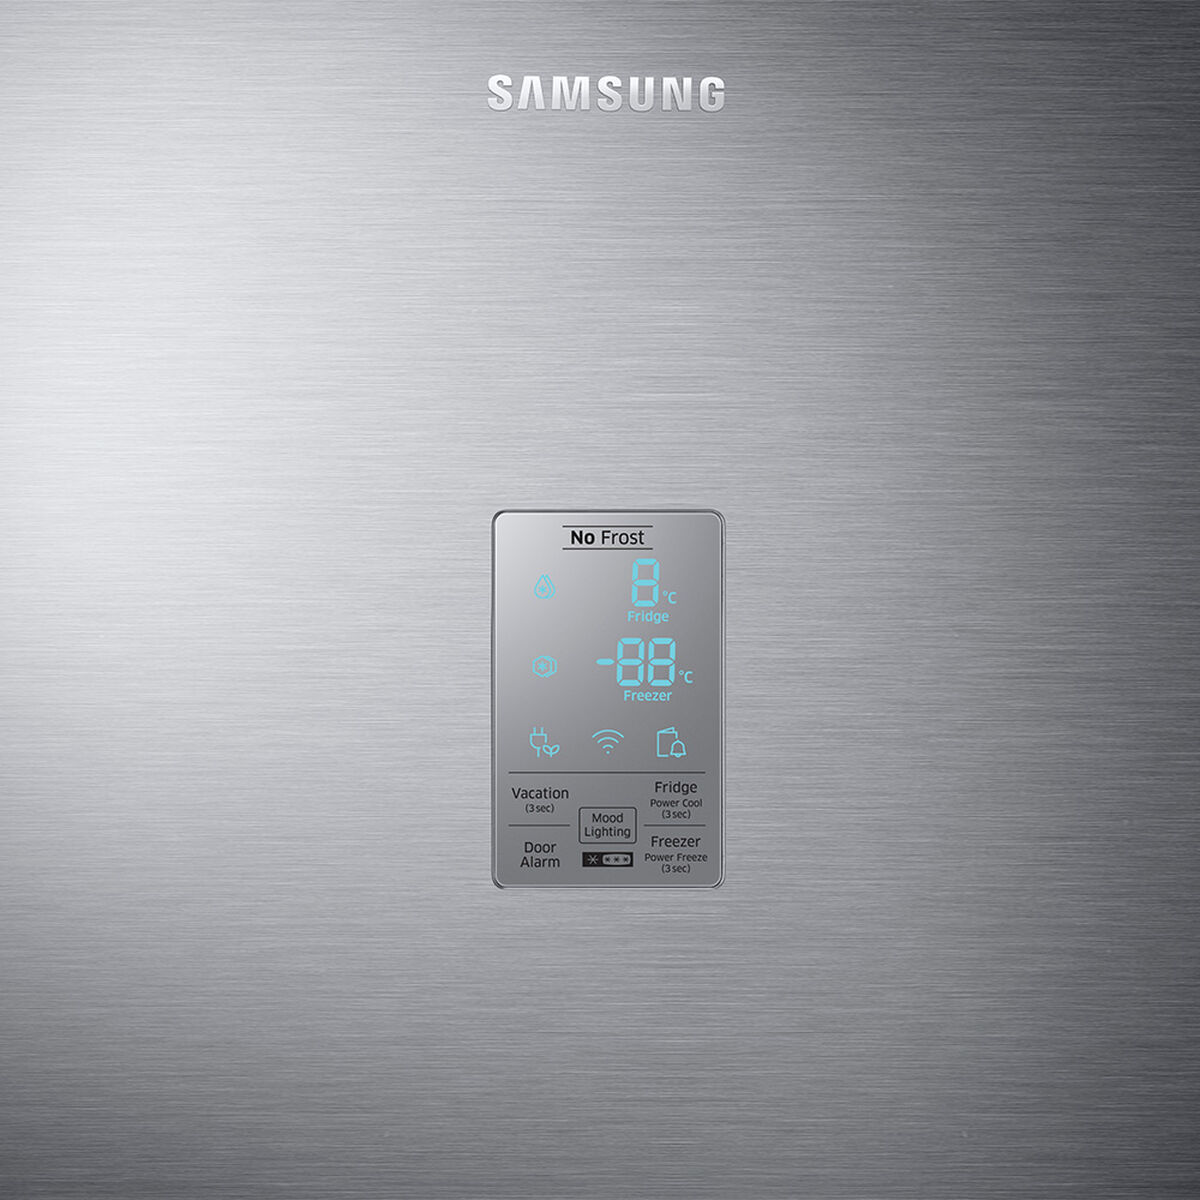 Refrigerador No Frost Samsung RB37K6060SS/ZS 367 lt